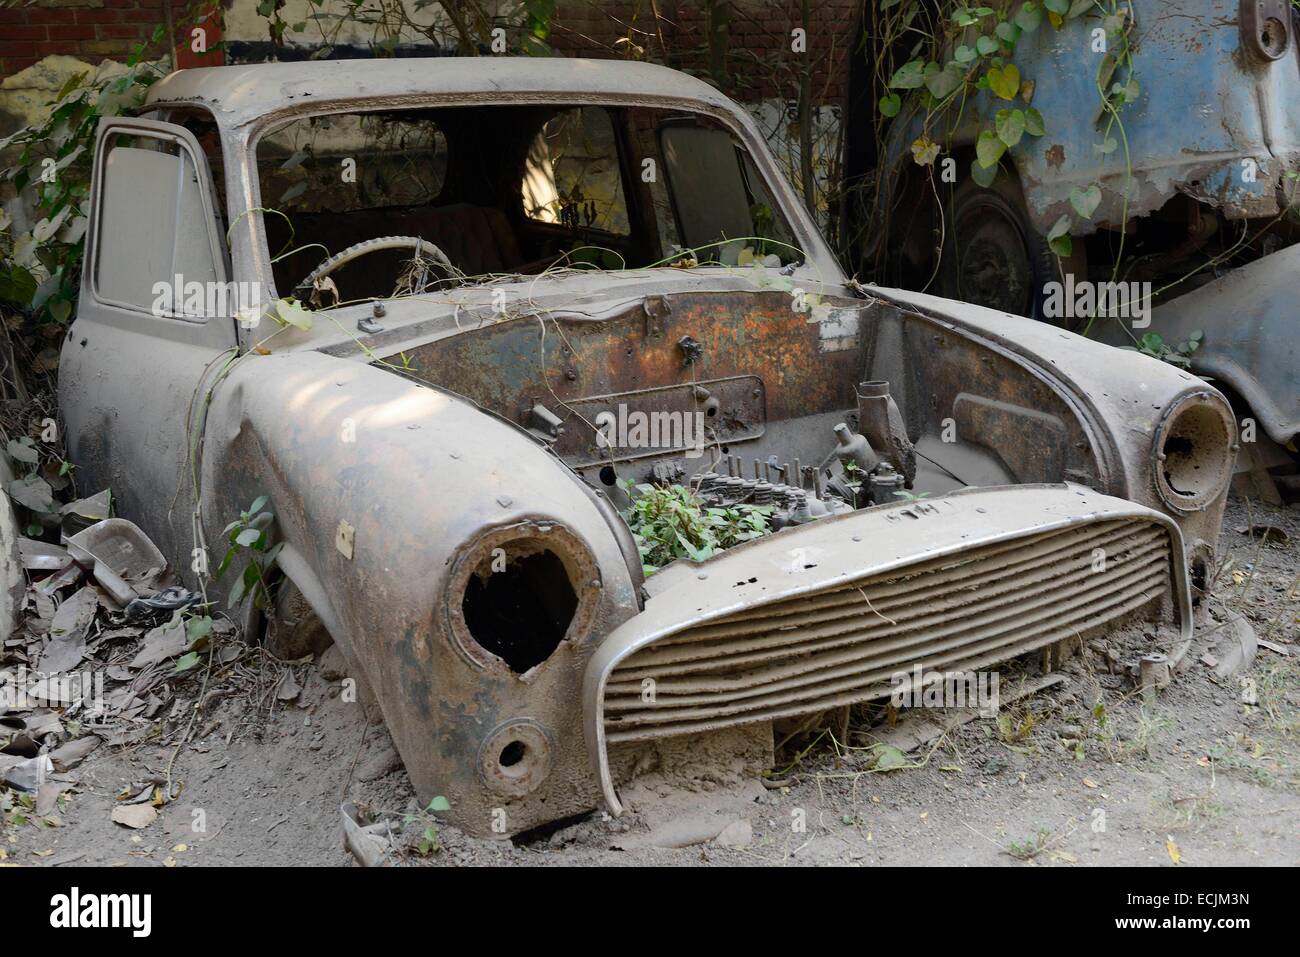 India, Uttar Pradesh, Lucknow, Breaker's yard, Wrecked Ambassador car Stock Photo